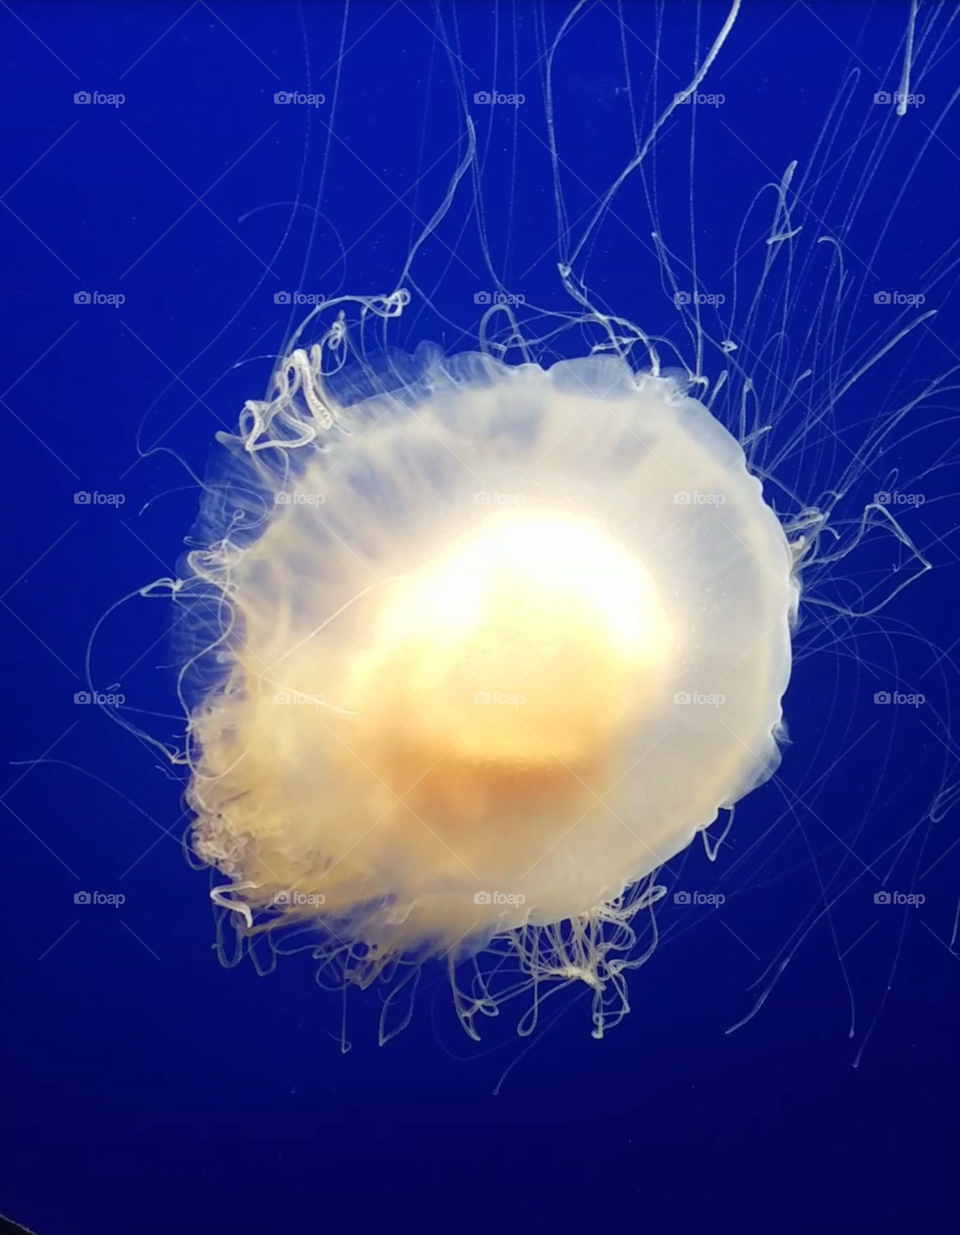 Egg Jellyfish